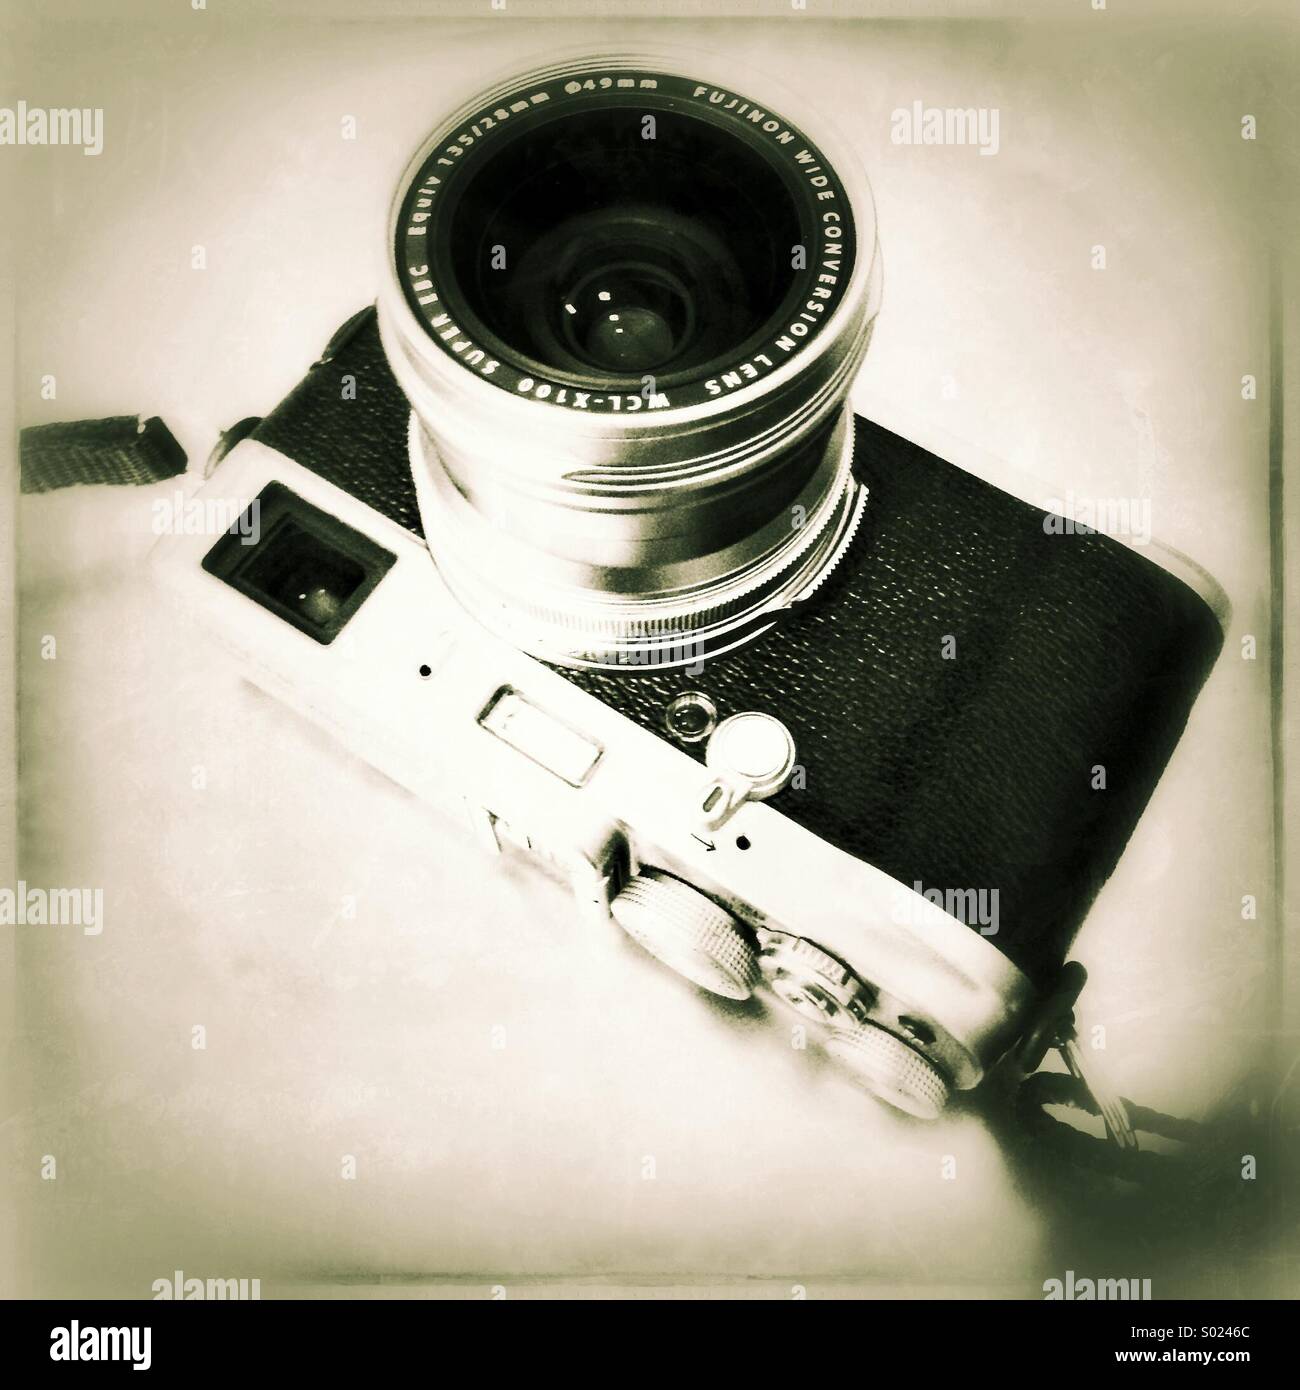 Retro-Design-Digitalkamera Stockfotografie - Alamy